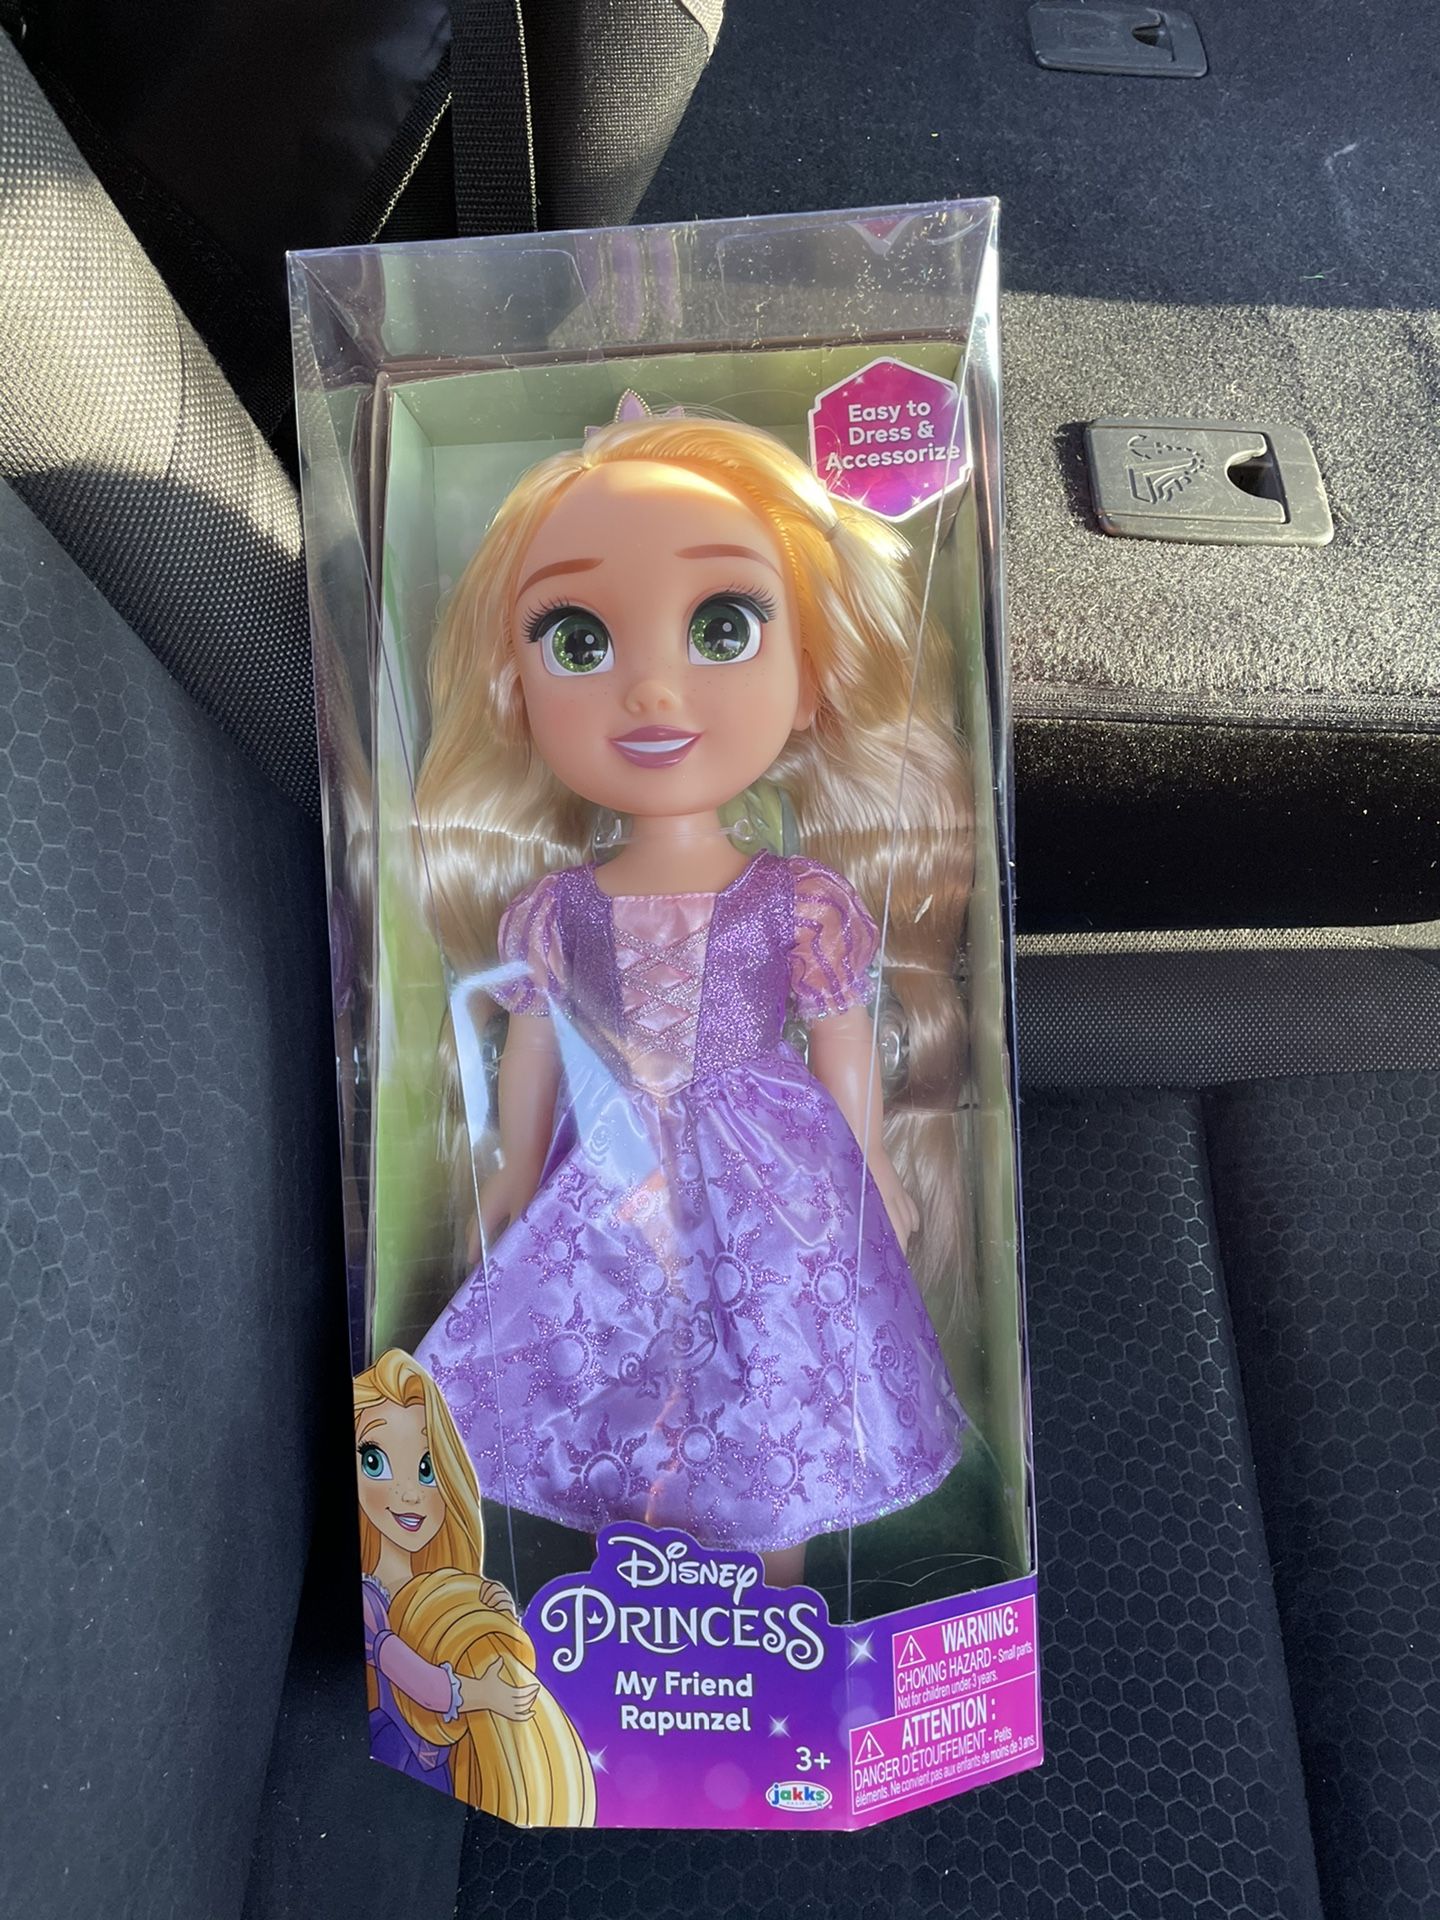 Disney Princess Dolls For Sale . Price Per Item